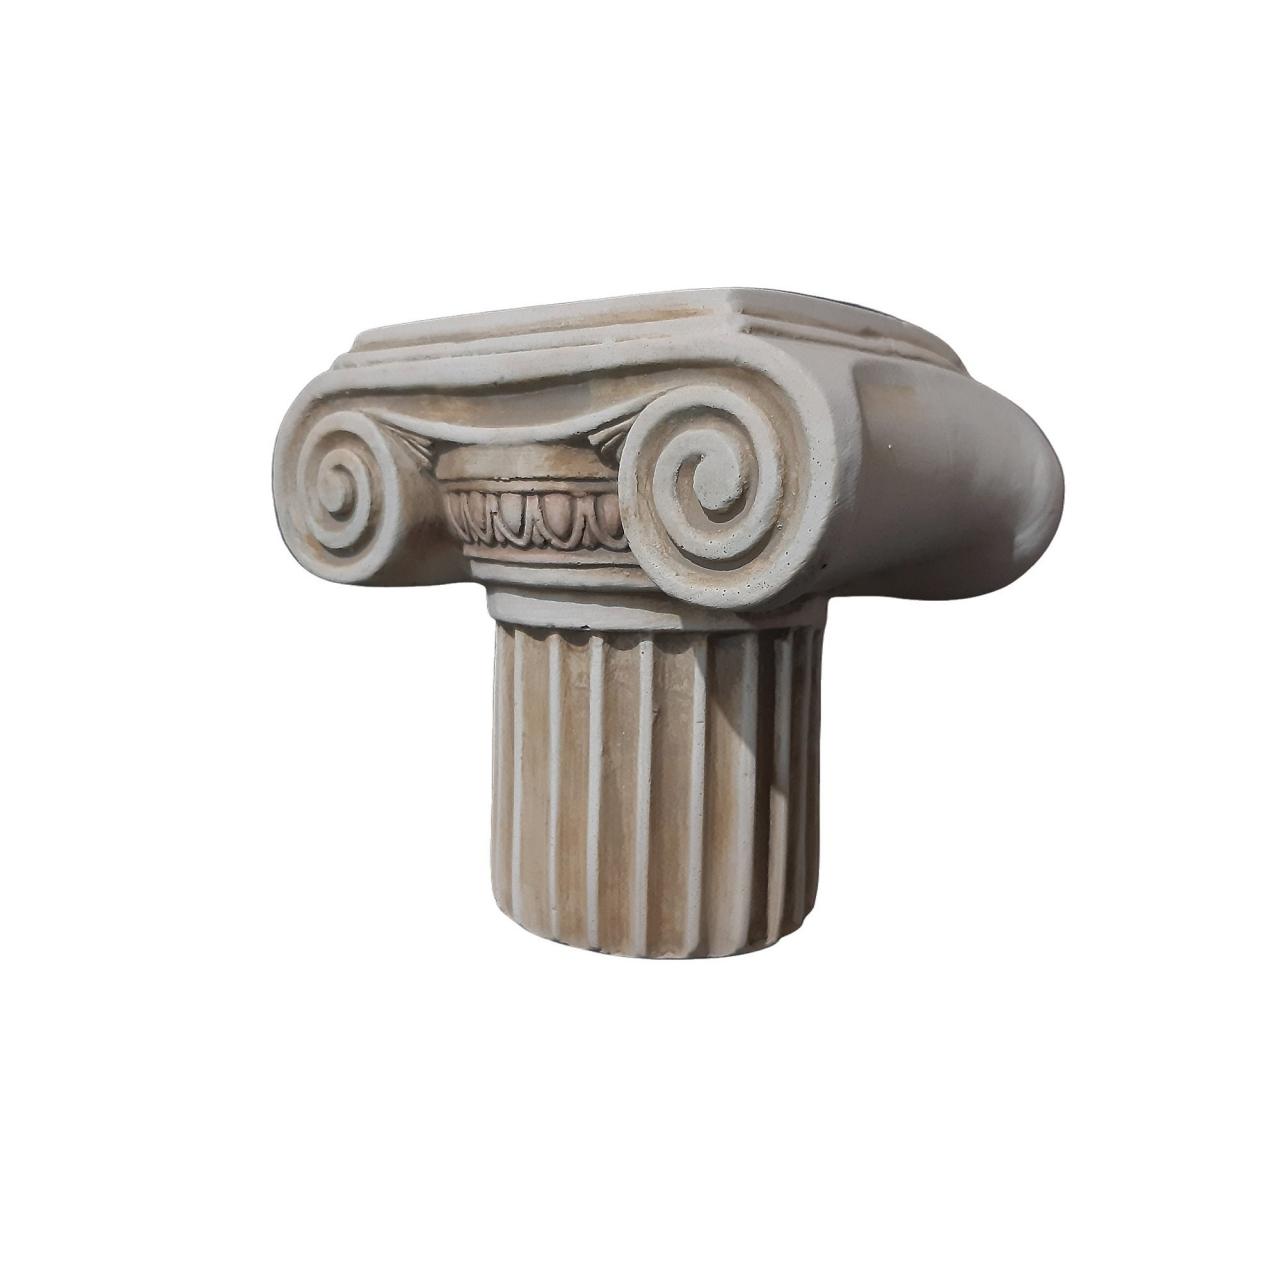 Ionic Order Column Pillar Ancient Greek Roman Statue Architecture Sculpture Made Of Plaster